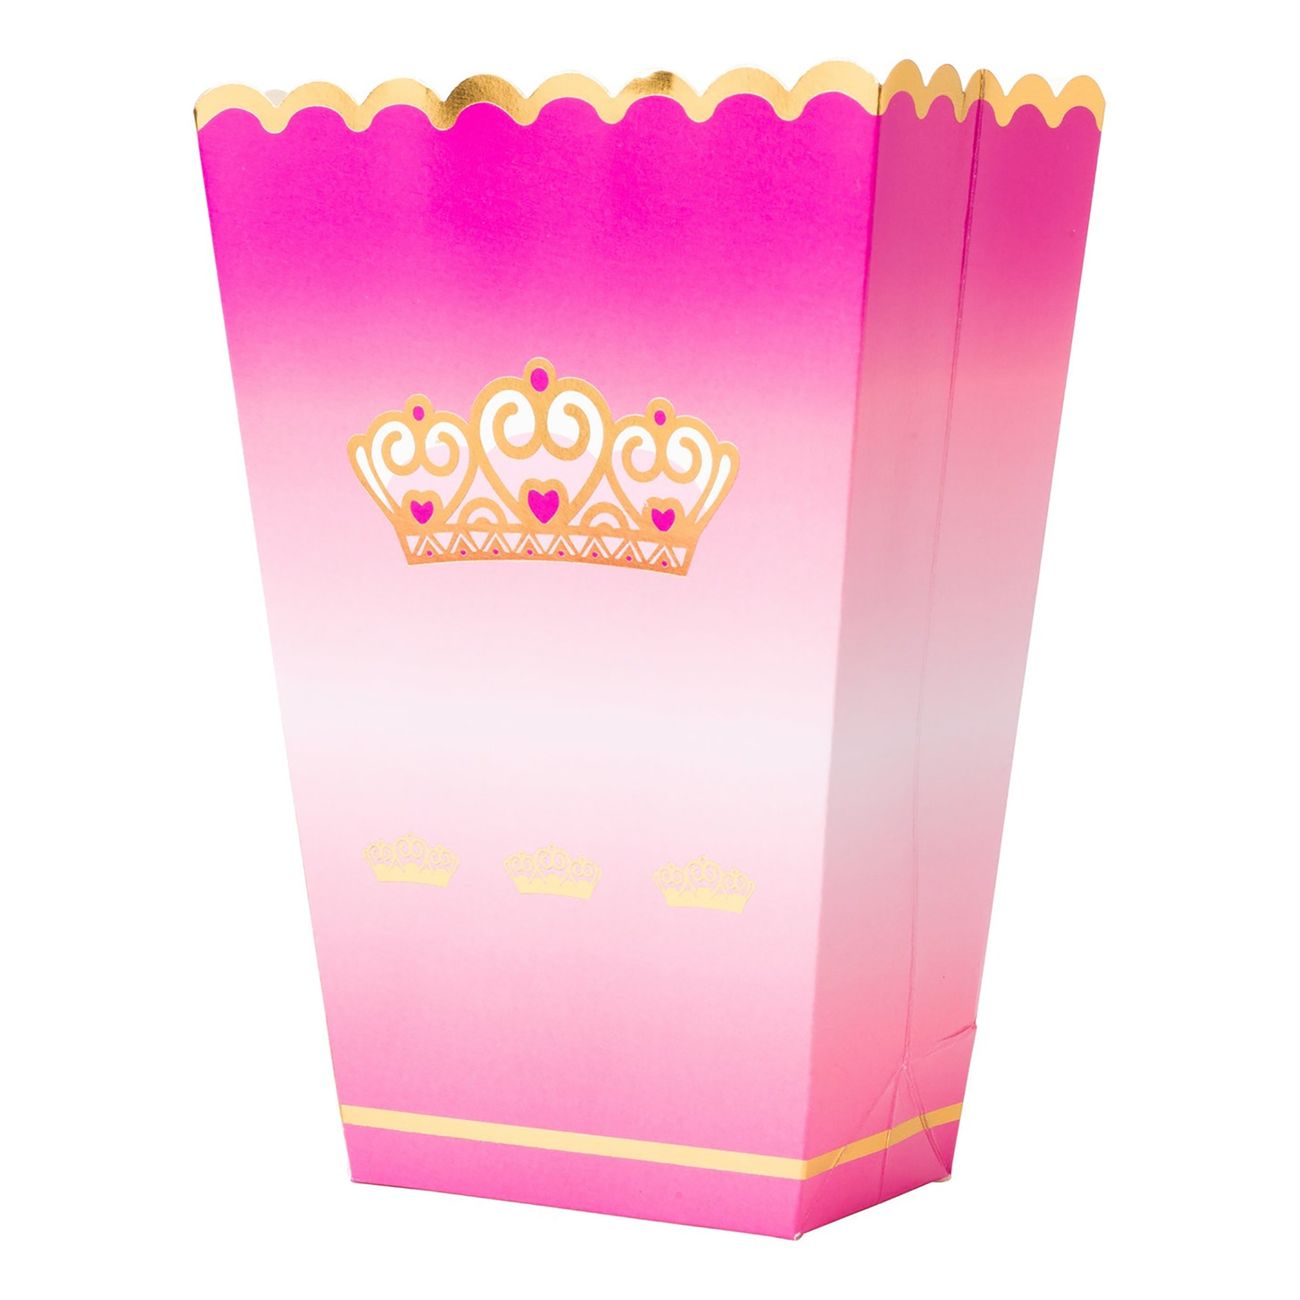 popcornbagare-13x19cm-8st-rosa-med-guldkrona-92066-1